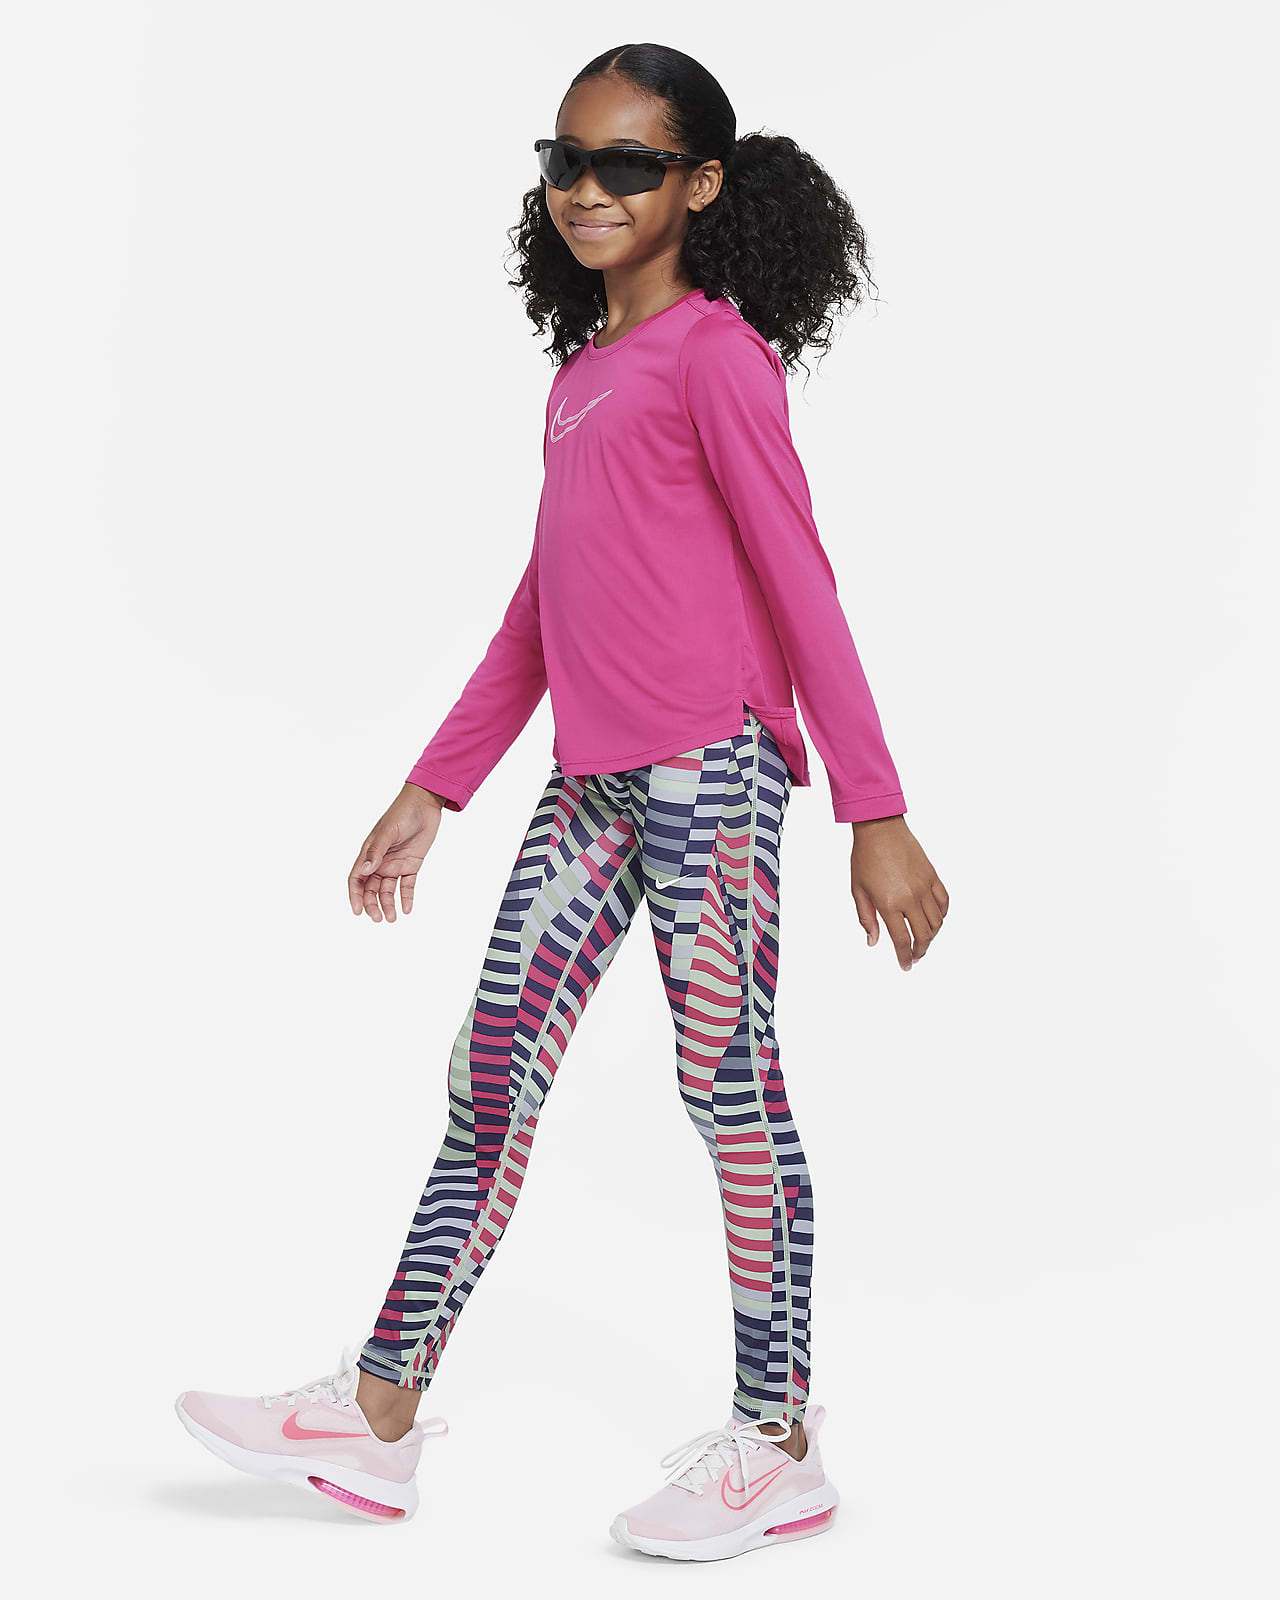 Nike Girl Long Sleeve Shirt and Leggings Set ~ Neon Pink, Black & White ~  Size 4